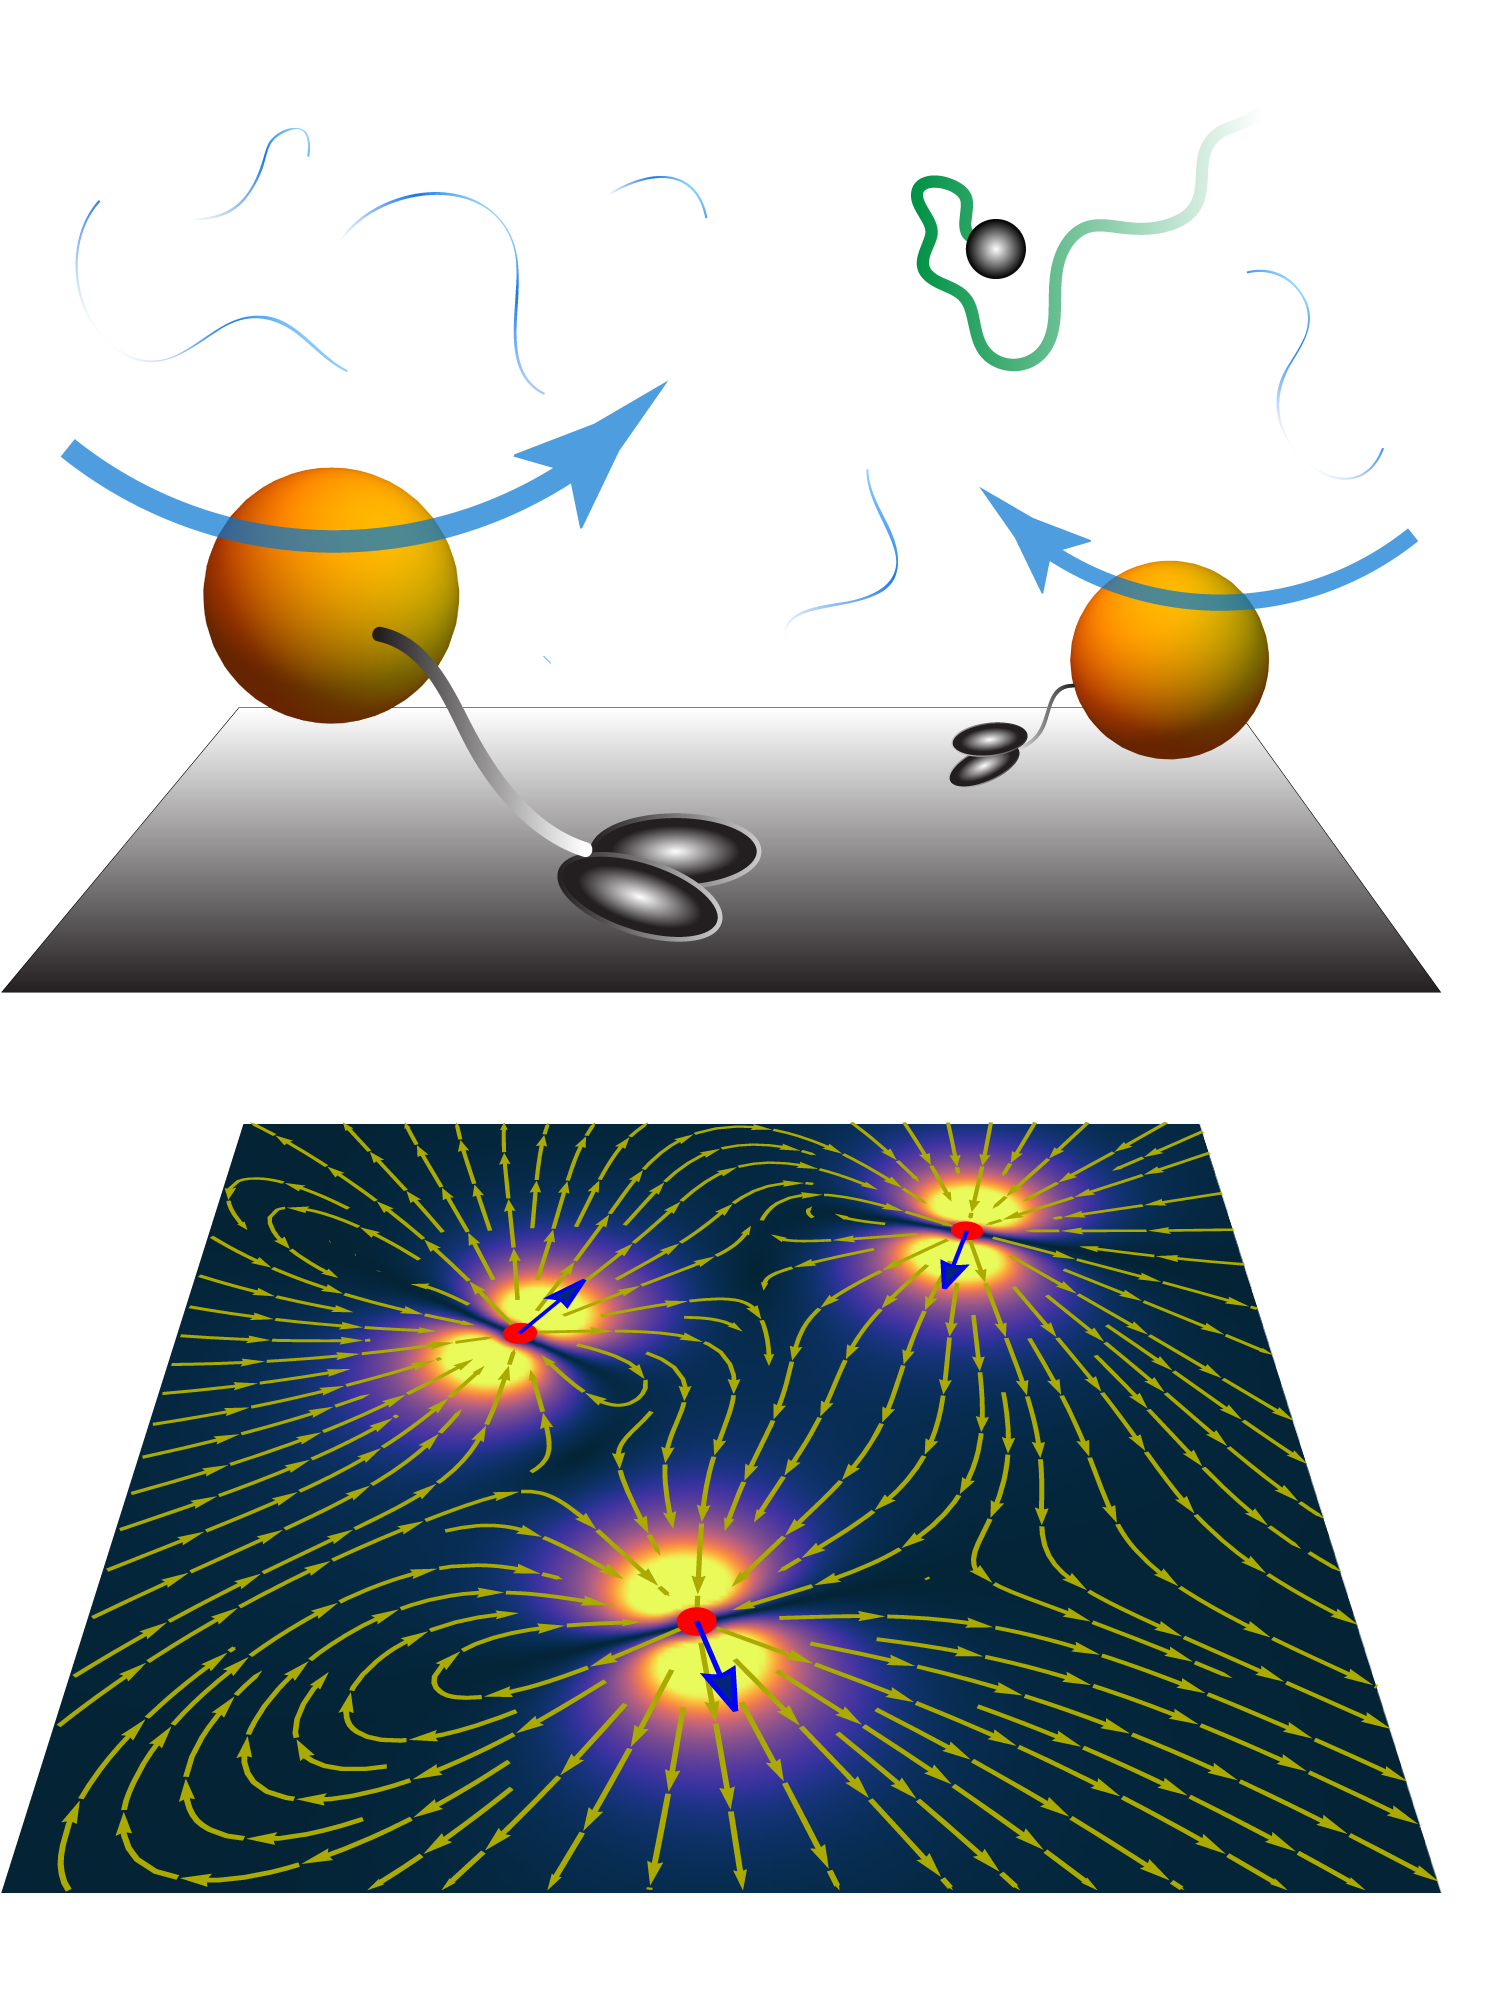 a diagram of flow fields generated molecular motors